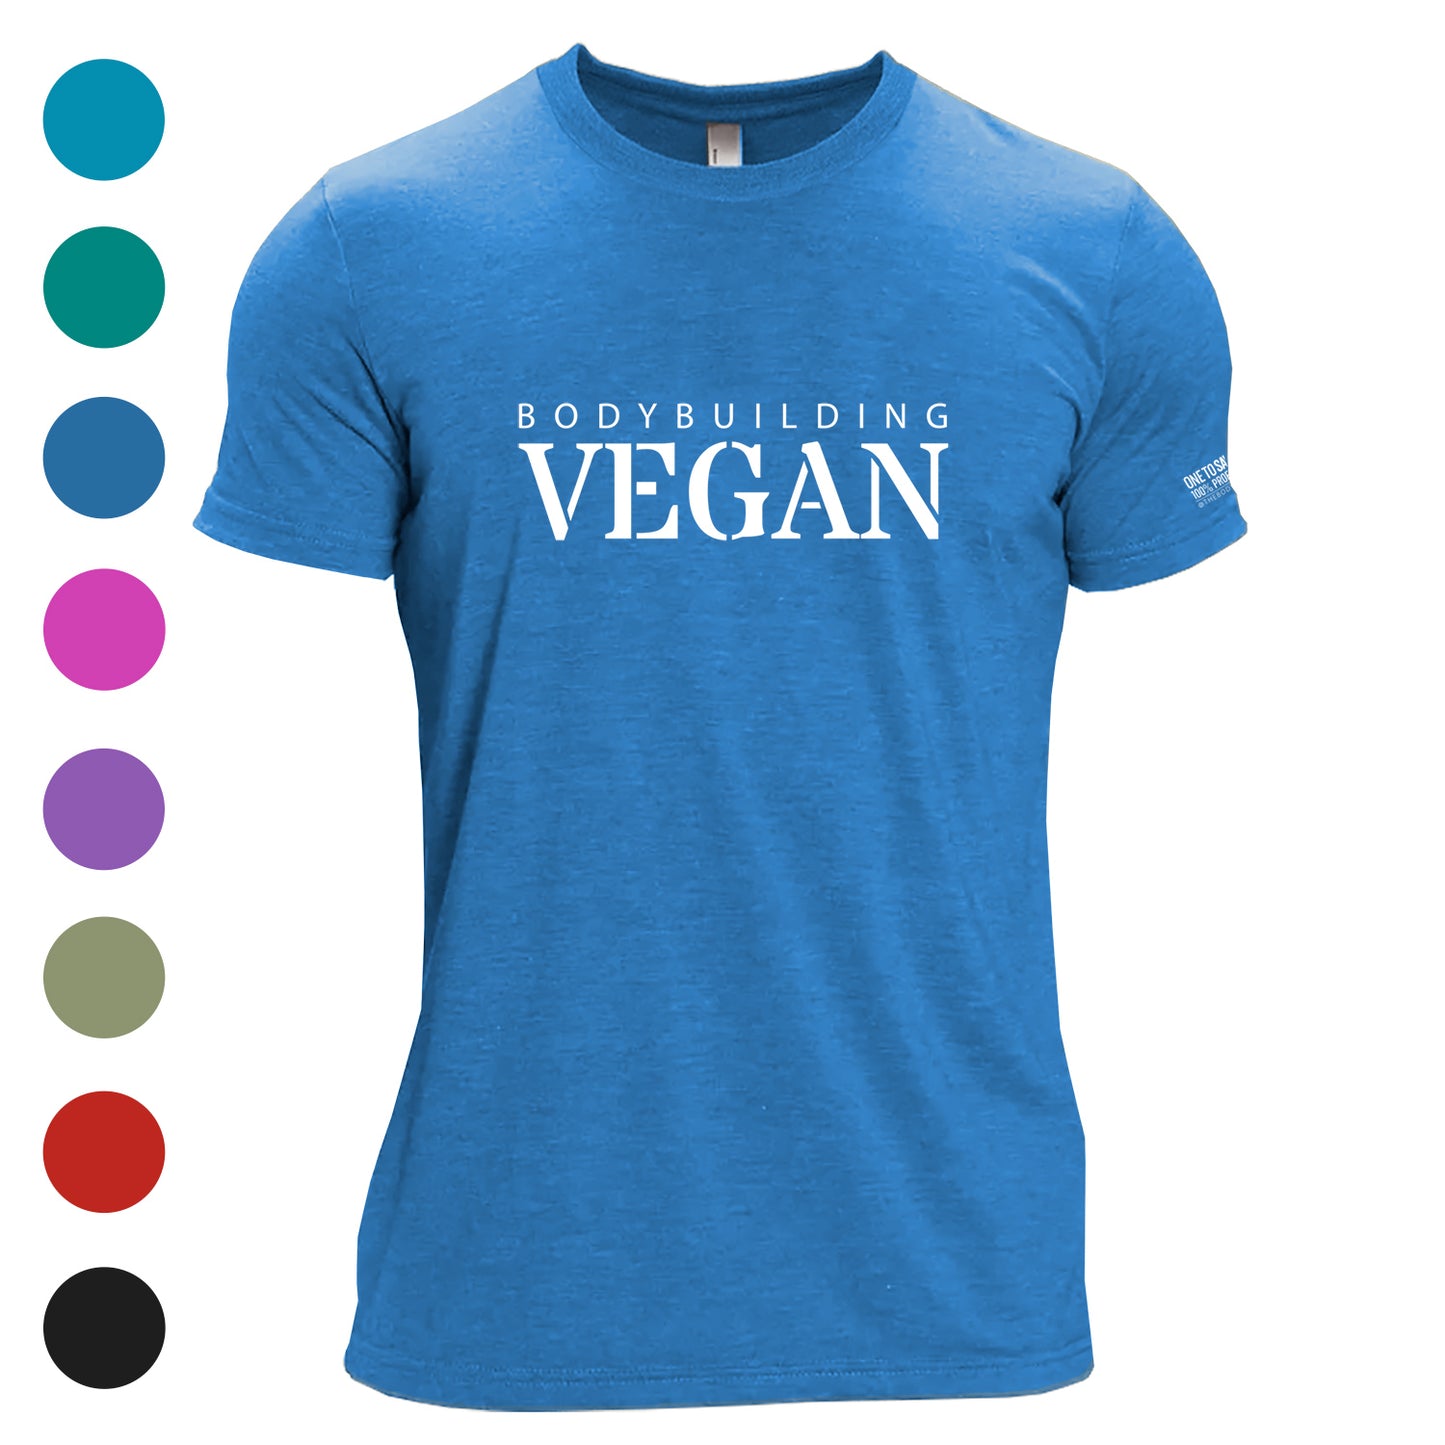 Unisex Bodybuilding Vegan Tri-Blend T-Shirt - Available in 9 Colors